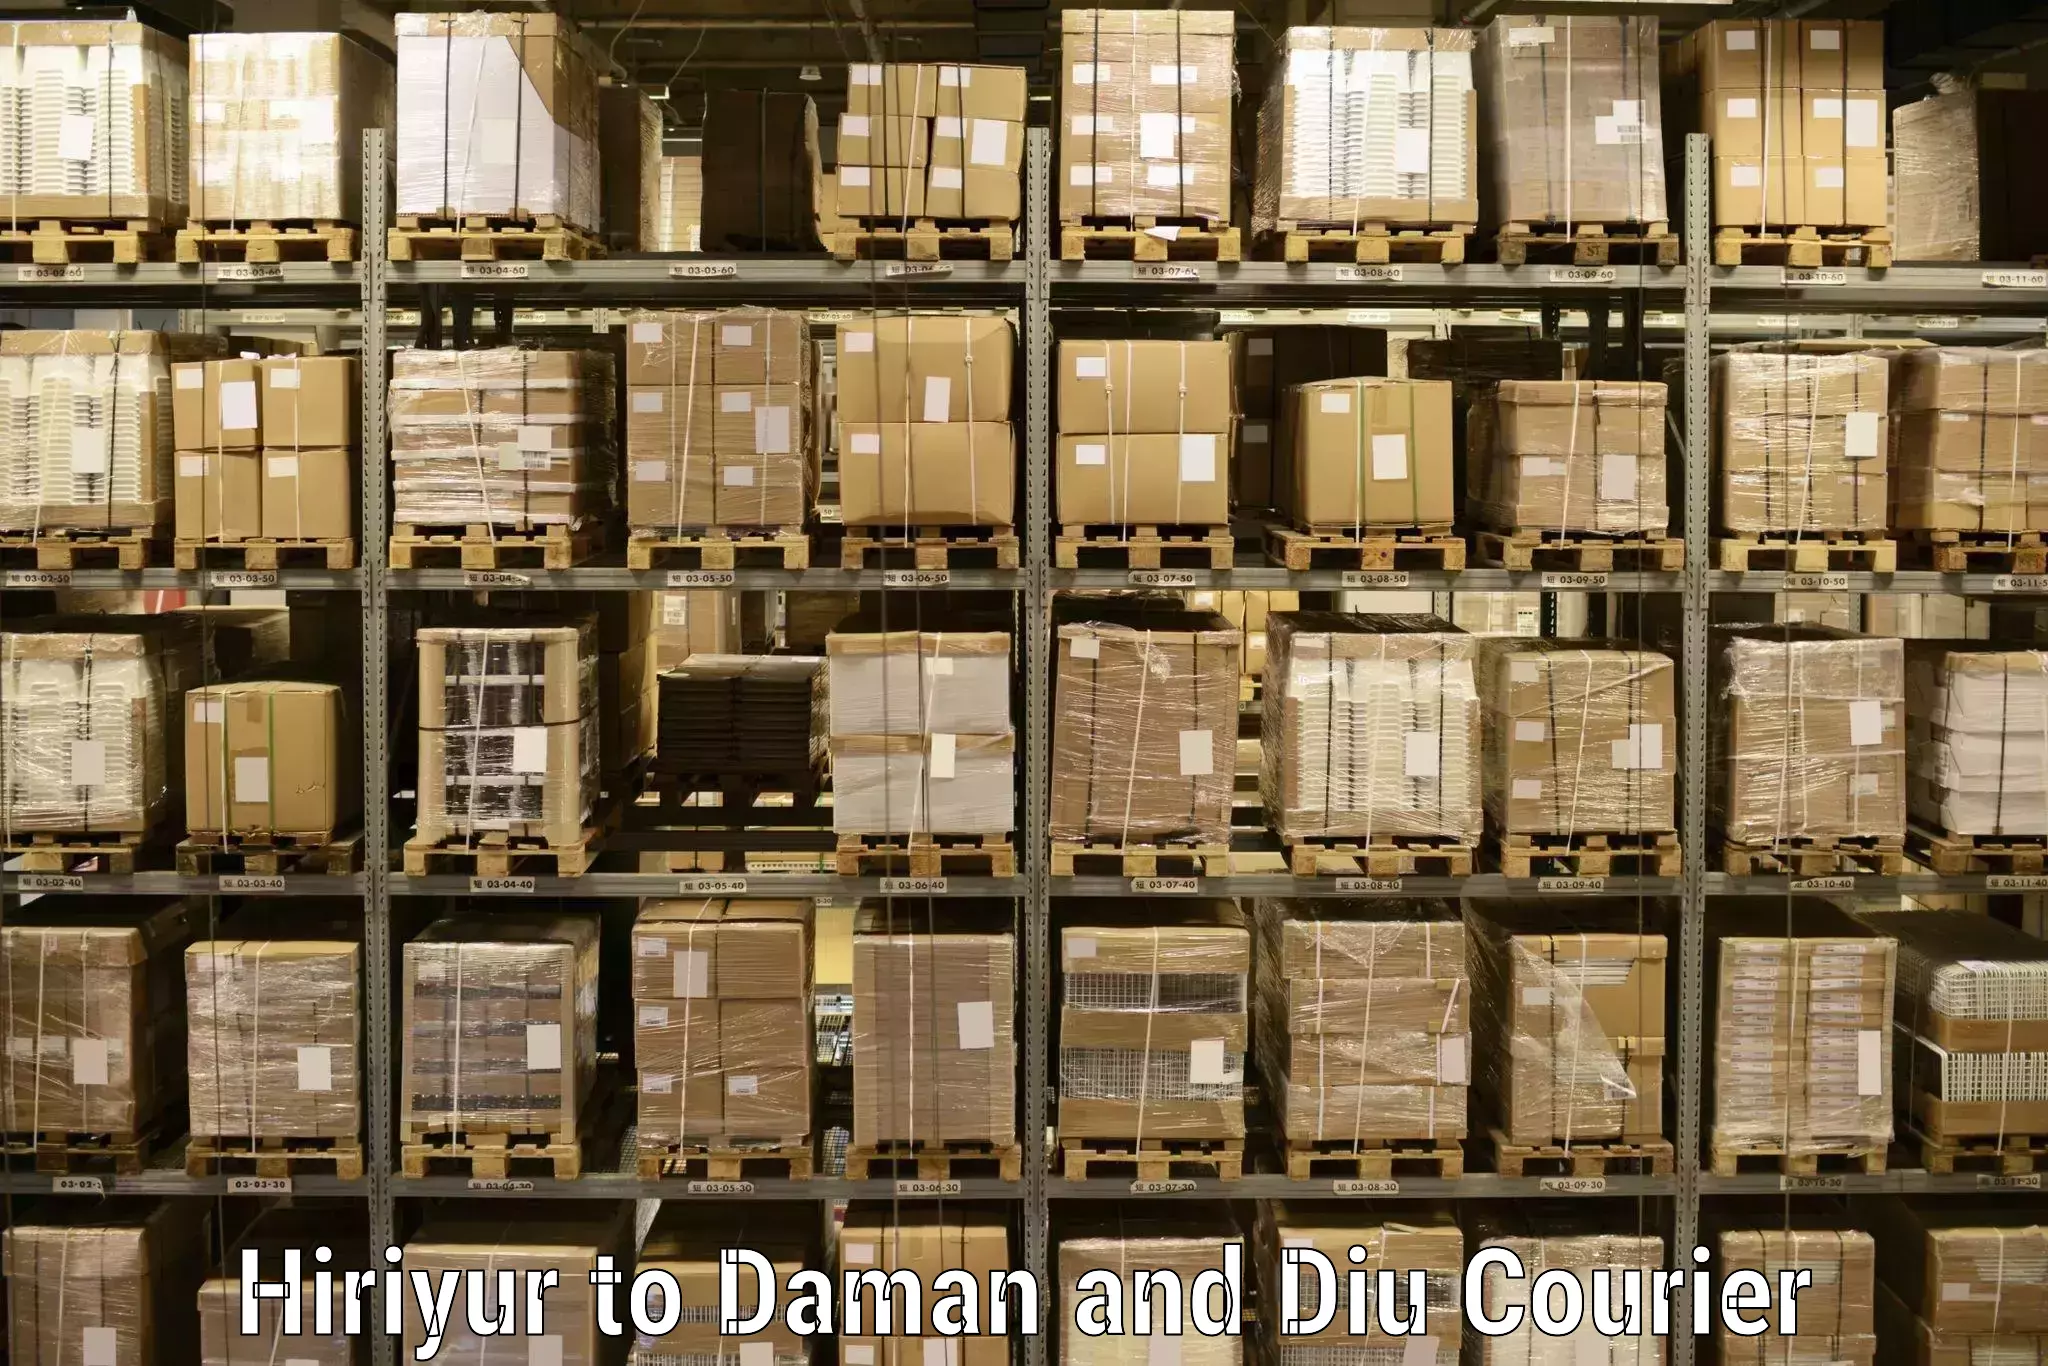 Logistics efficiency Hiriyur to Daman and Diu